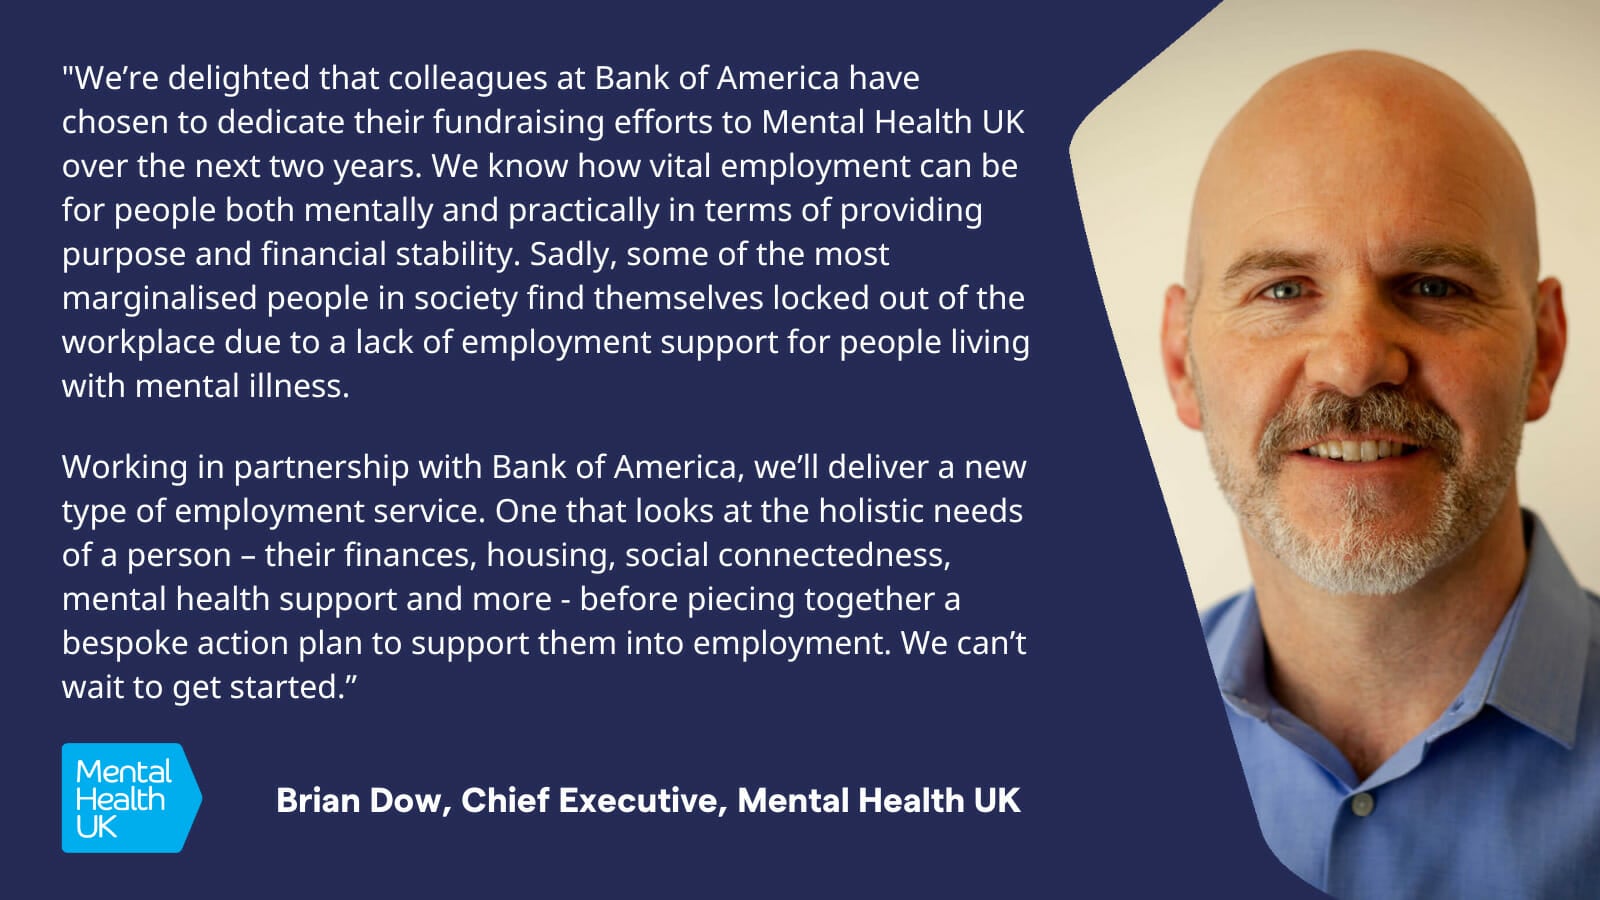 Bank of America and Mental Health UK